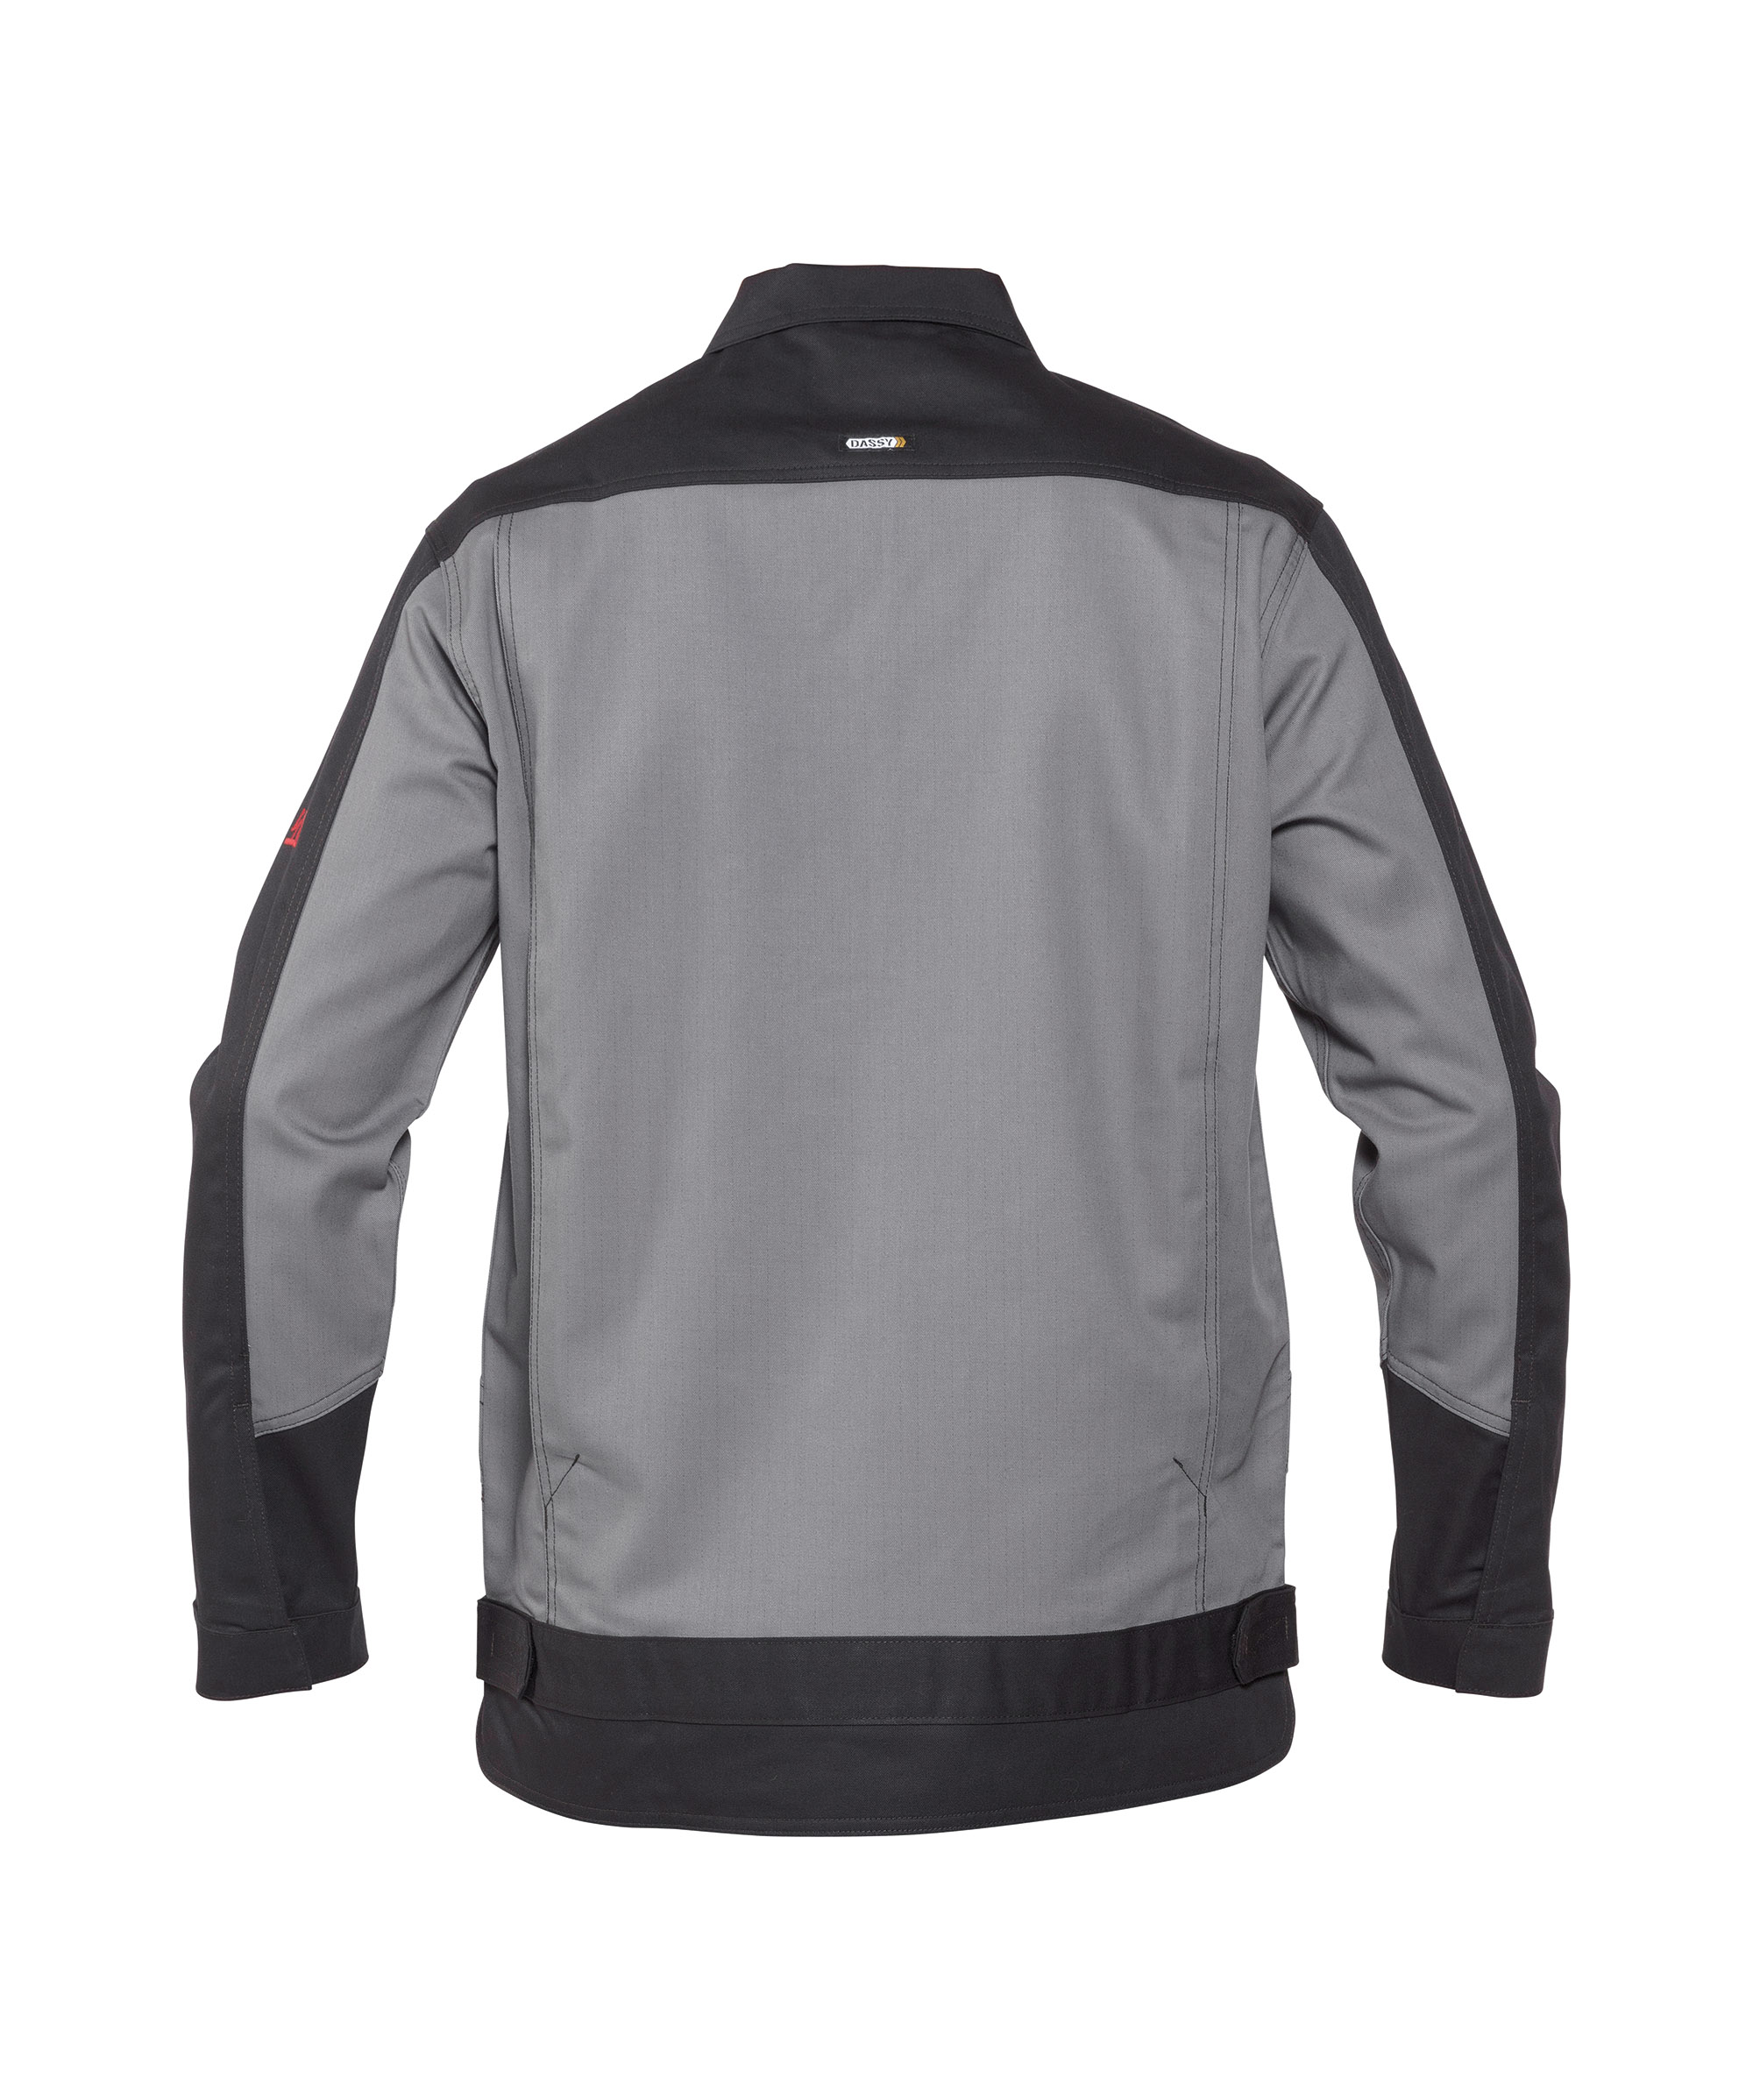 kiel_two-tone-multinorm-work-jacket_graphite-grey-black_back.jpg